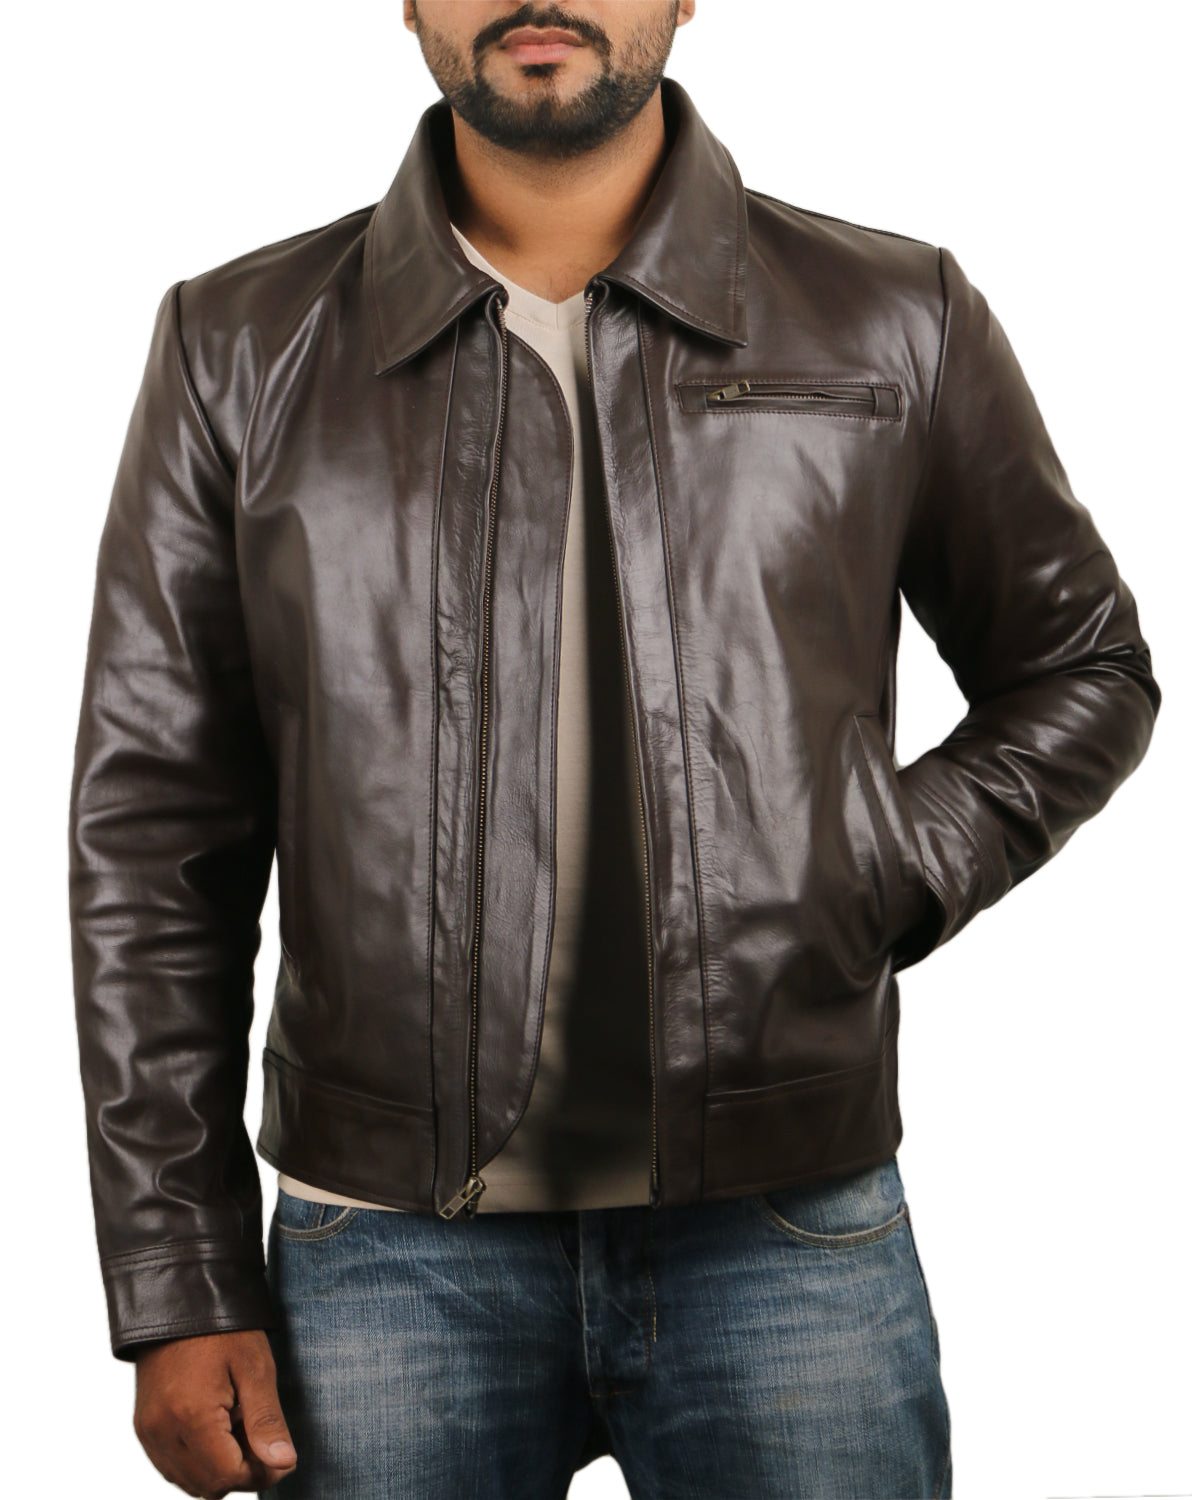 Leather Jackets Hub Mens Genuine Cowhide Leather Jacket (Black, Aviator Jacket) - 1501584